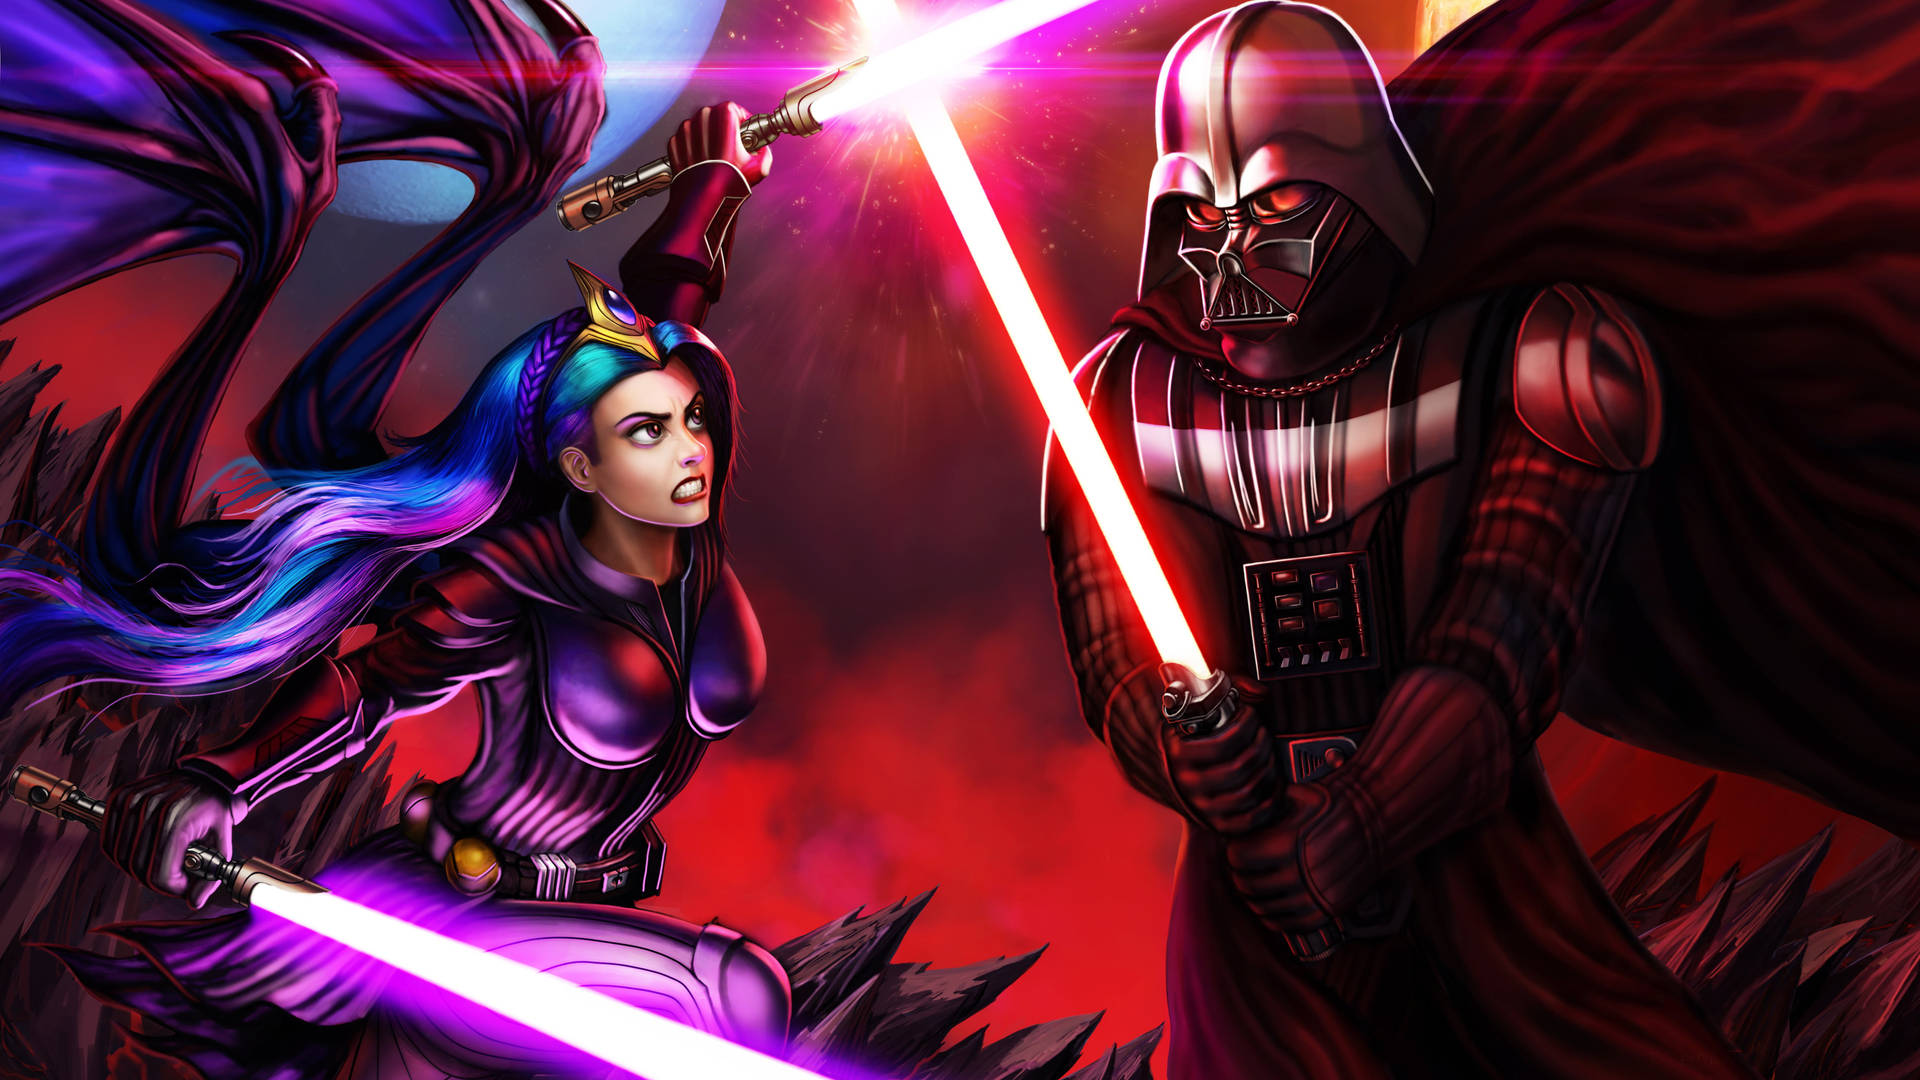 Darth Vader 4k Versus Jedi Background